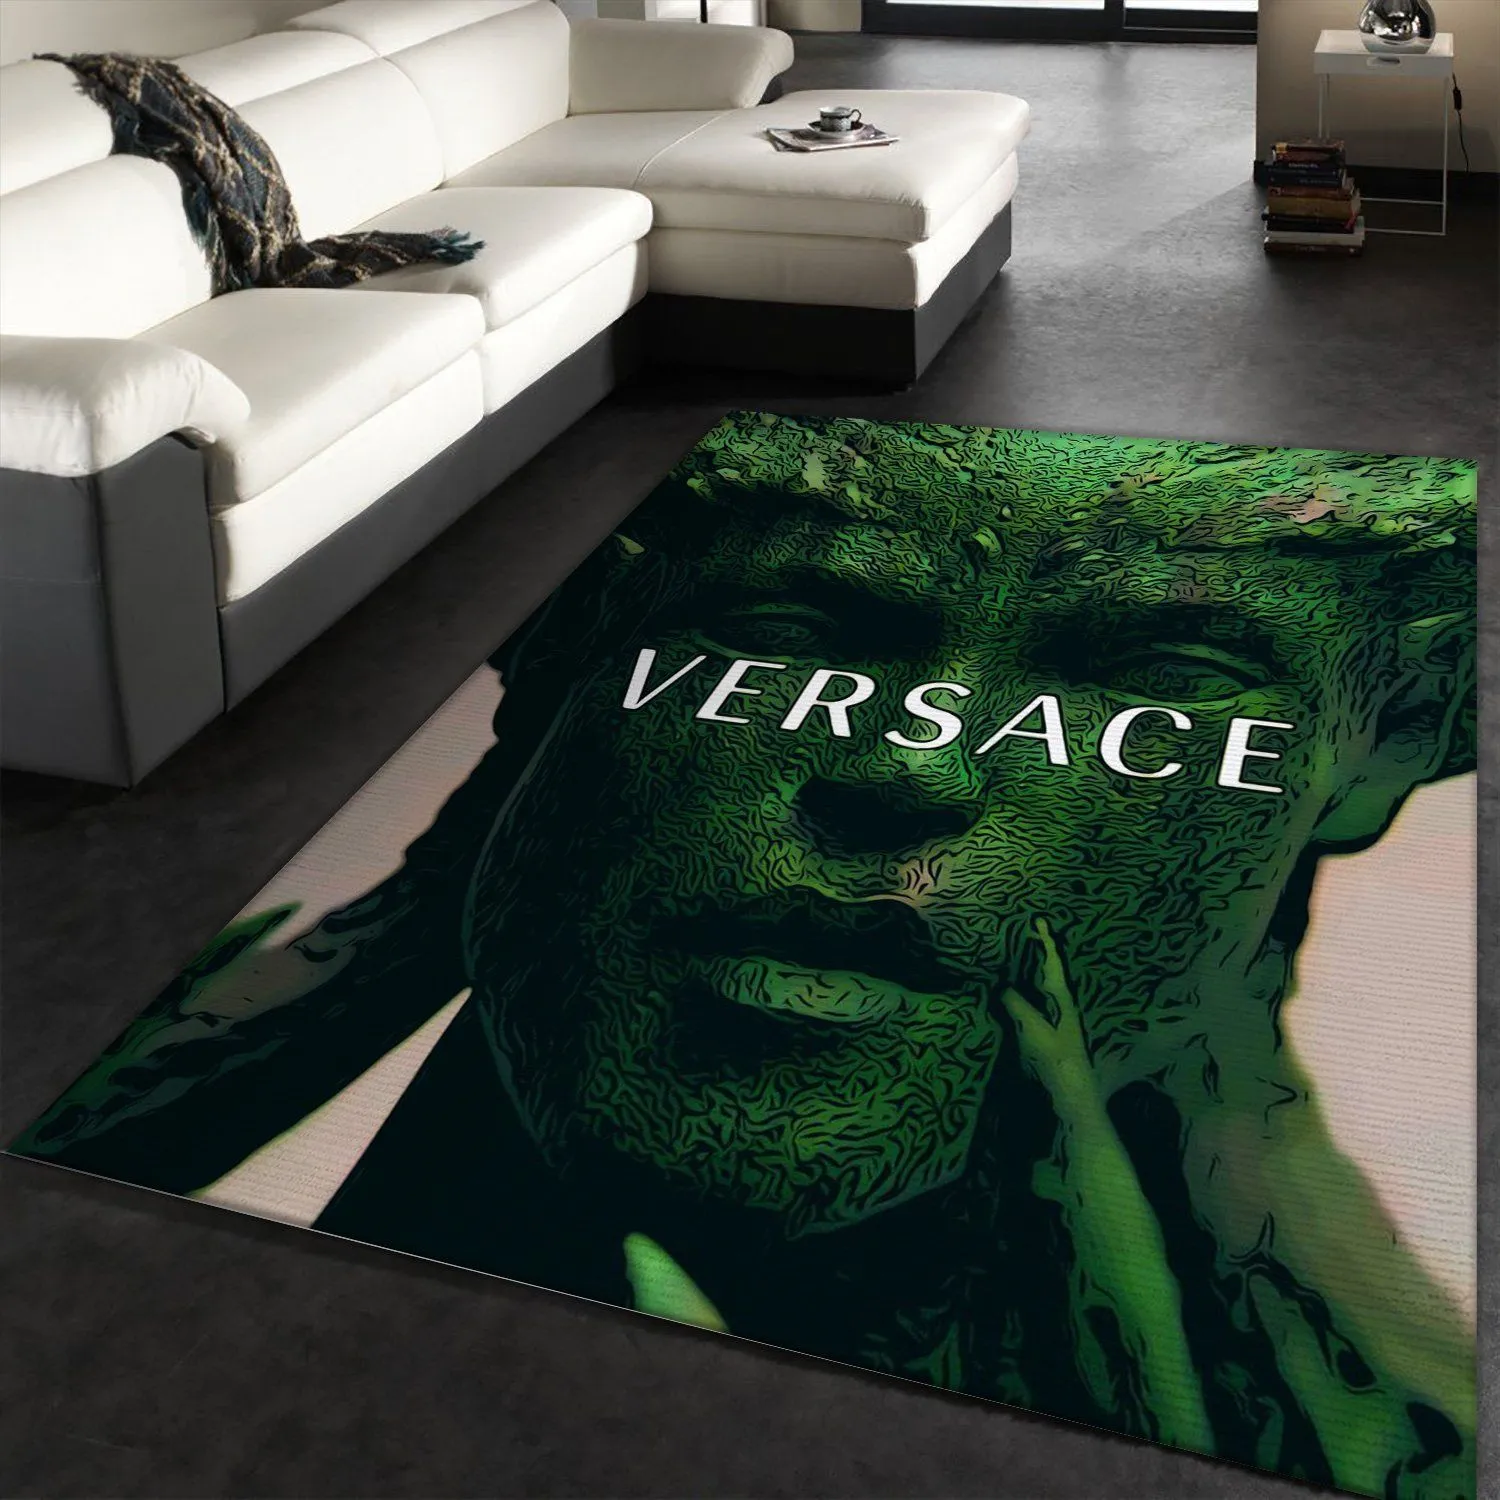 Versace Medusahead Rectangle Rug Door Mat Area Carpet Fashion Brand Home Decor Luxury